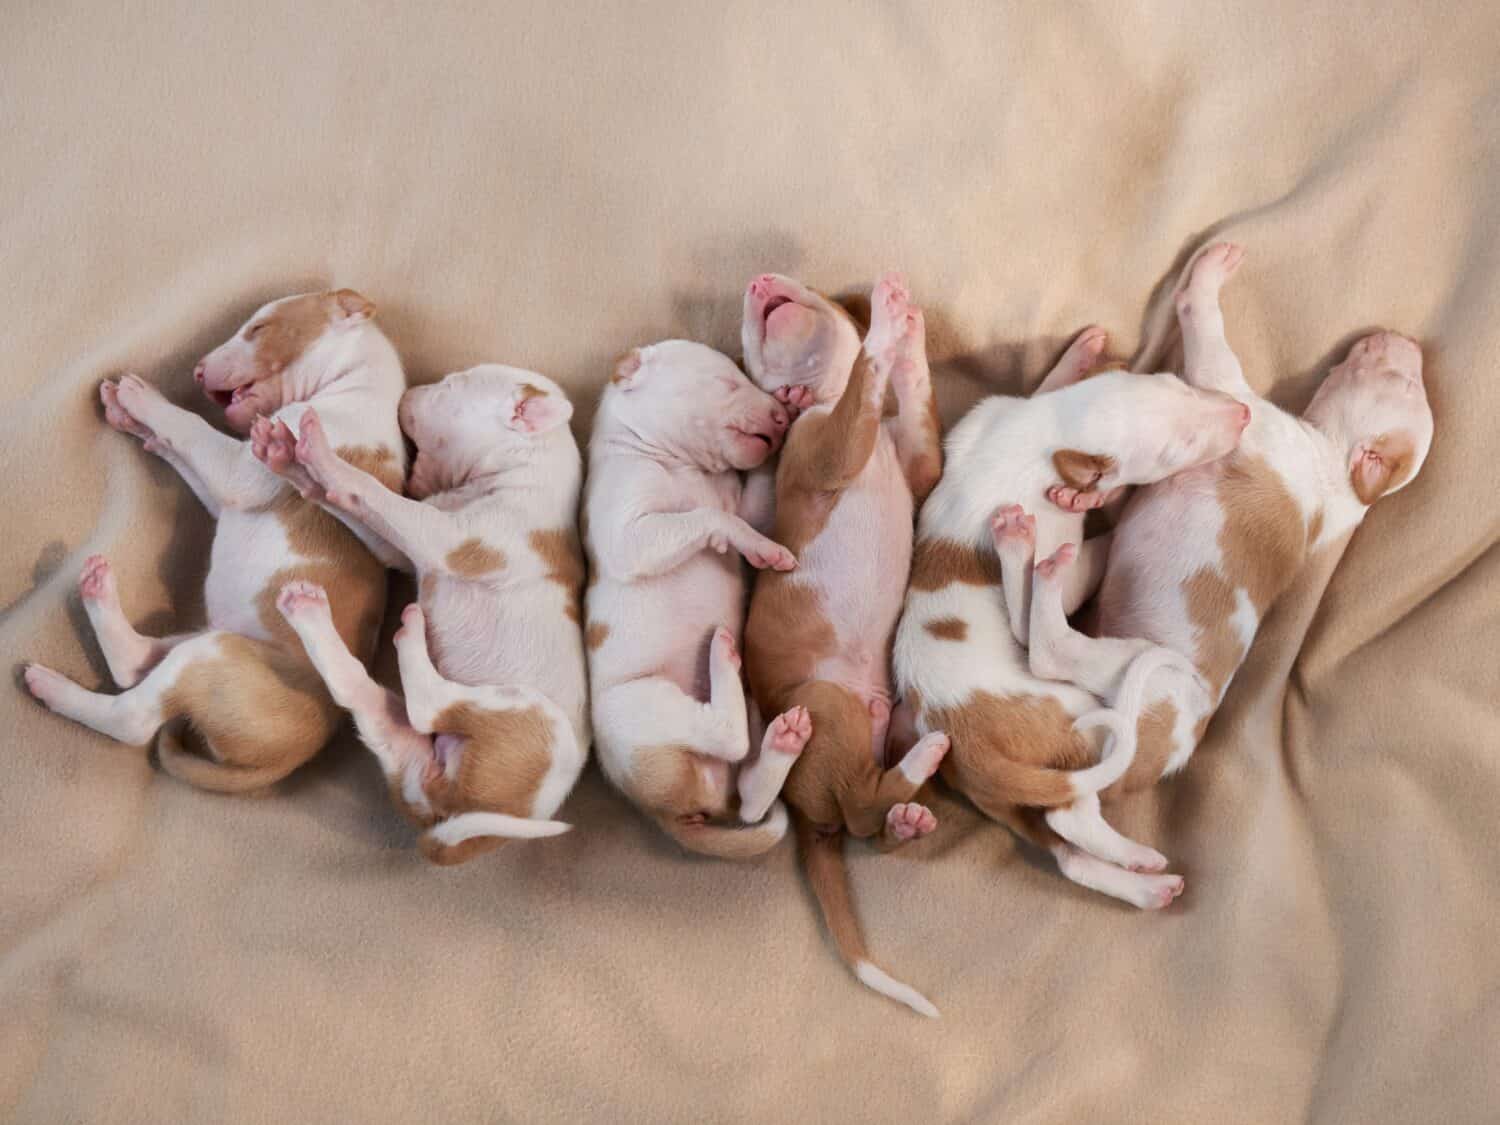 sweet six Newborn puppies sleeping on bed. dog Spanish greyhound at home